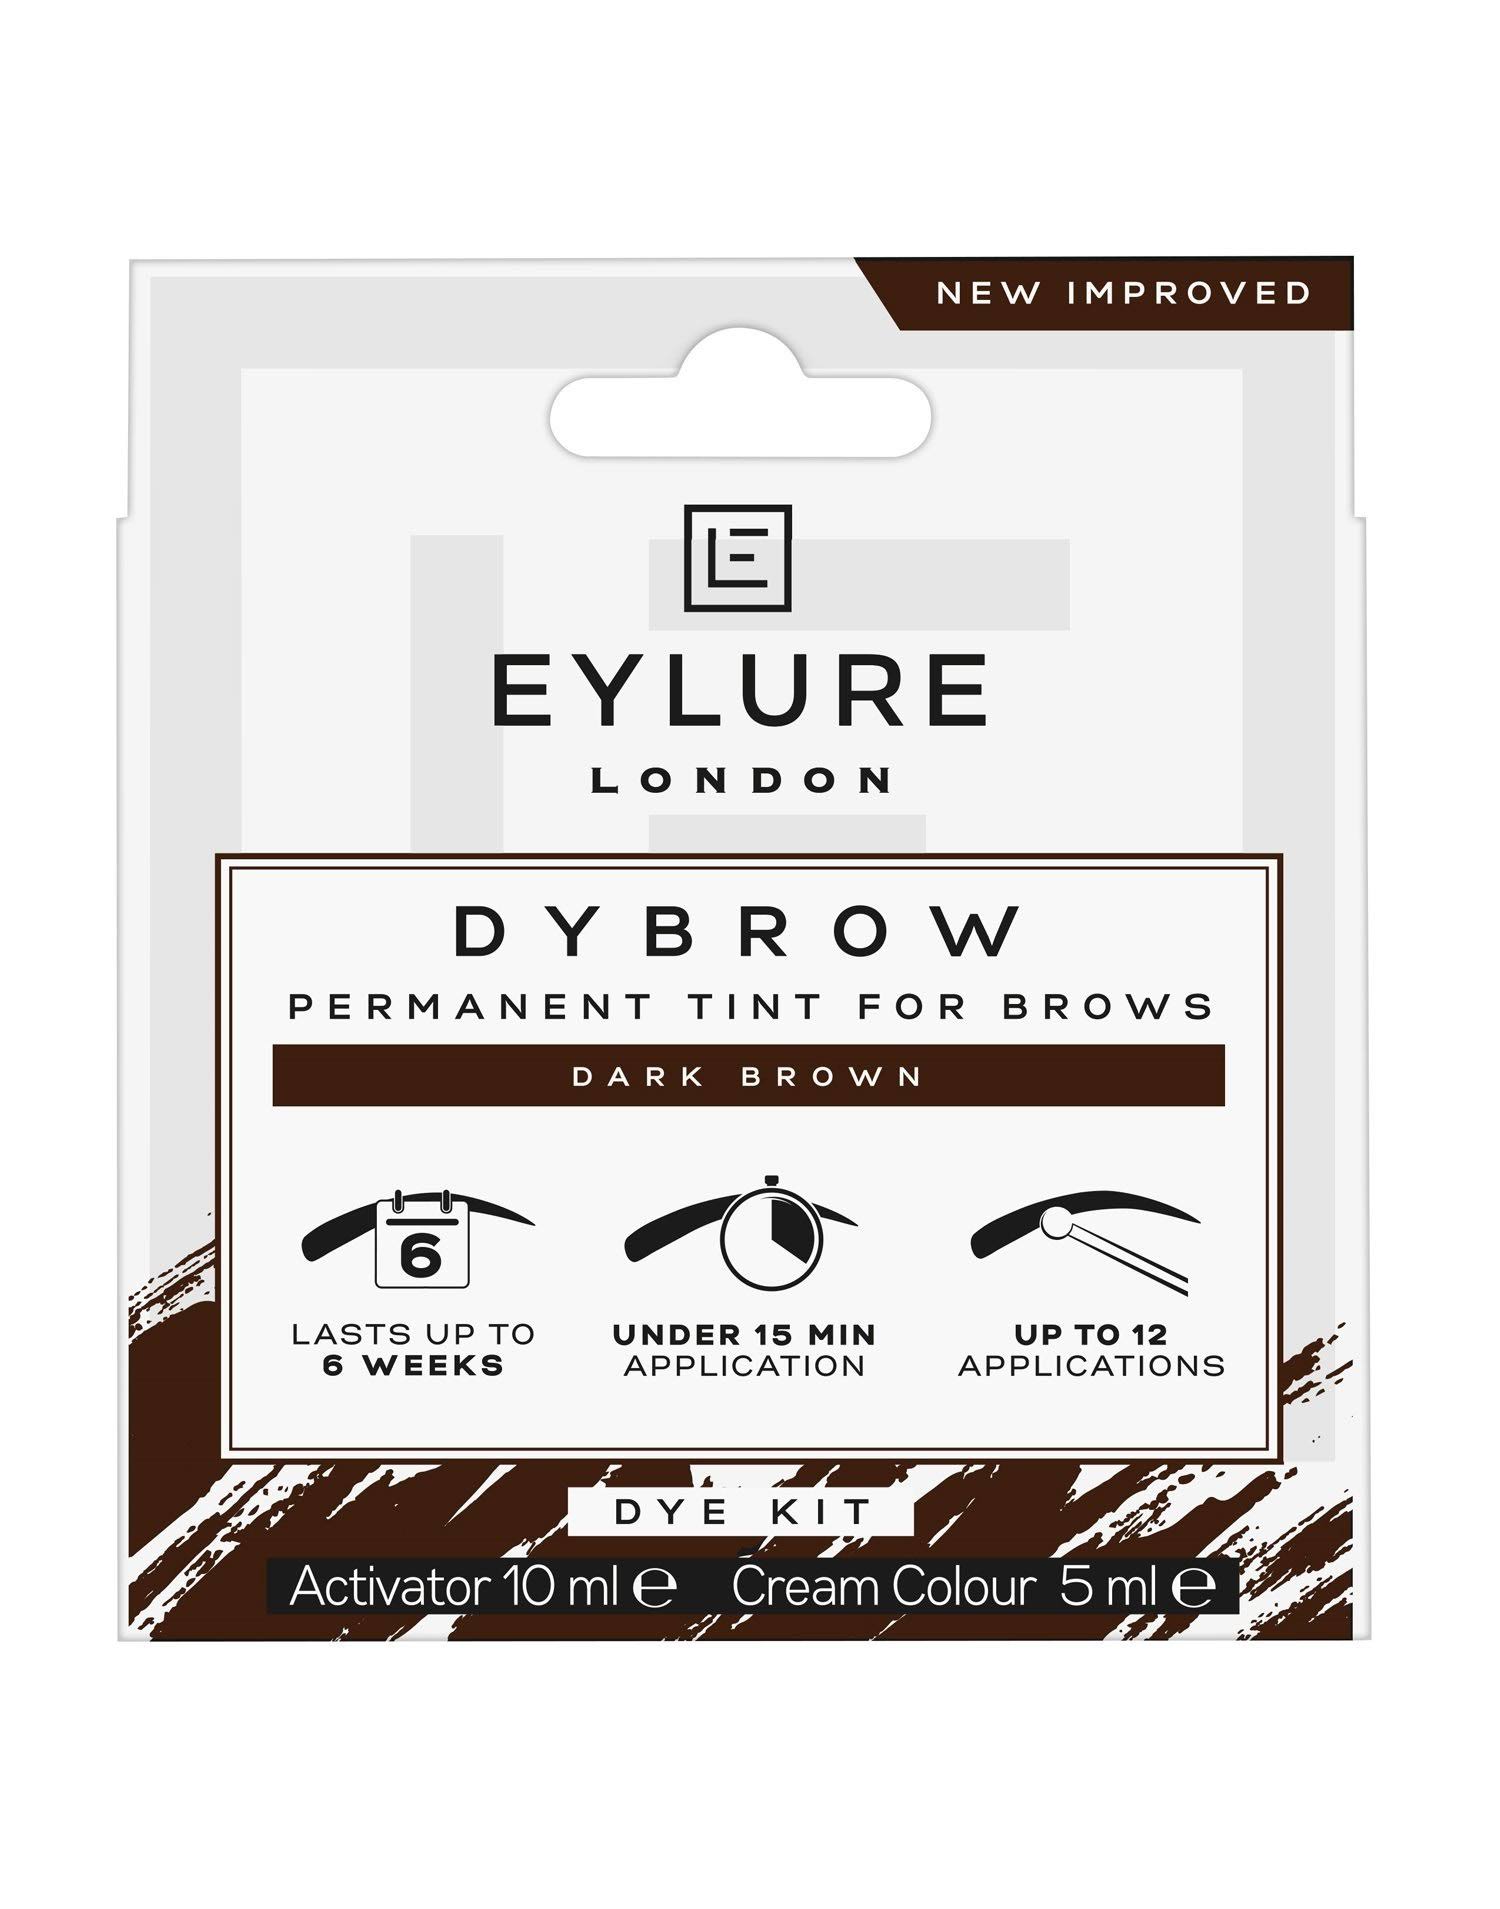 Eylure Pro Brow Dybrow Dye Kit - Dark Brown